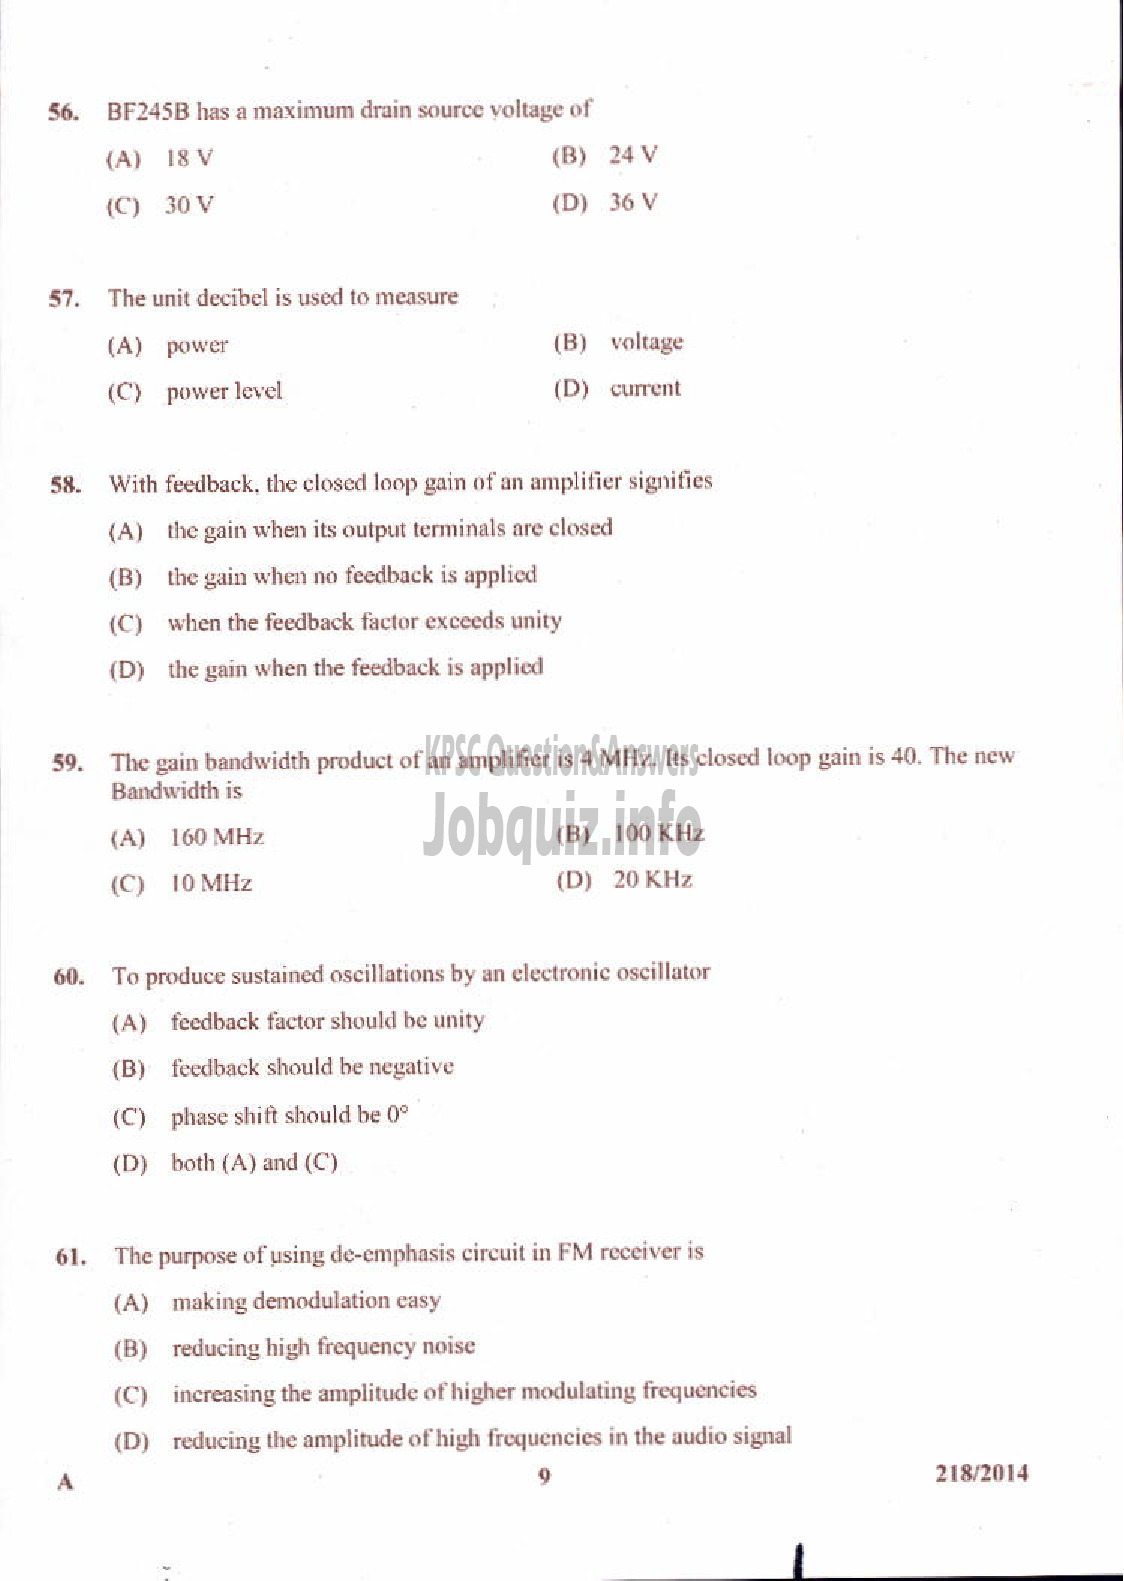 Kerala PSC Question Paper - LABORATORY TECHNICAL ASSISTANT MRRTV VHSE-9